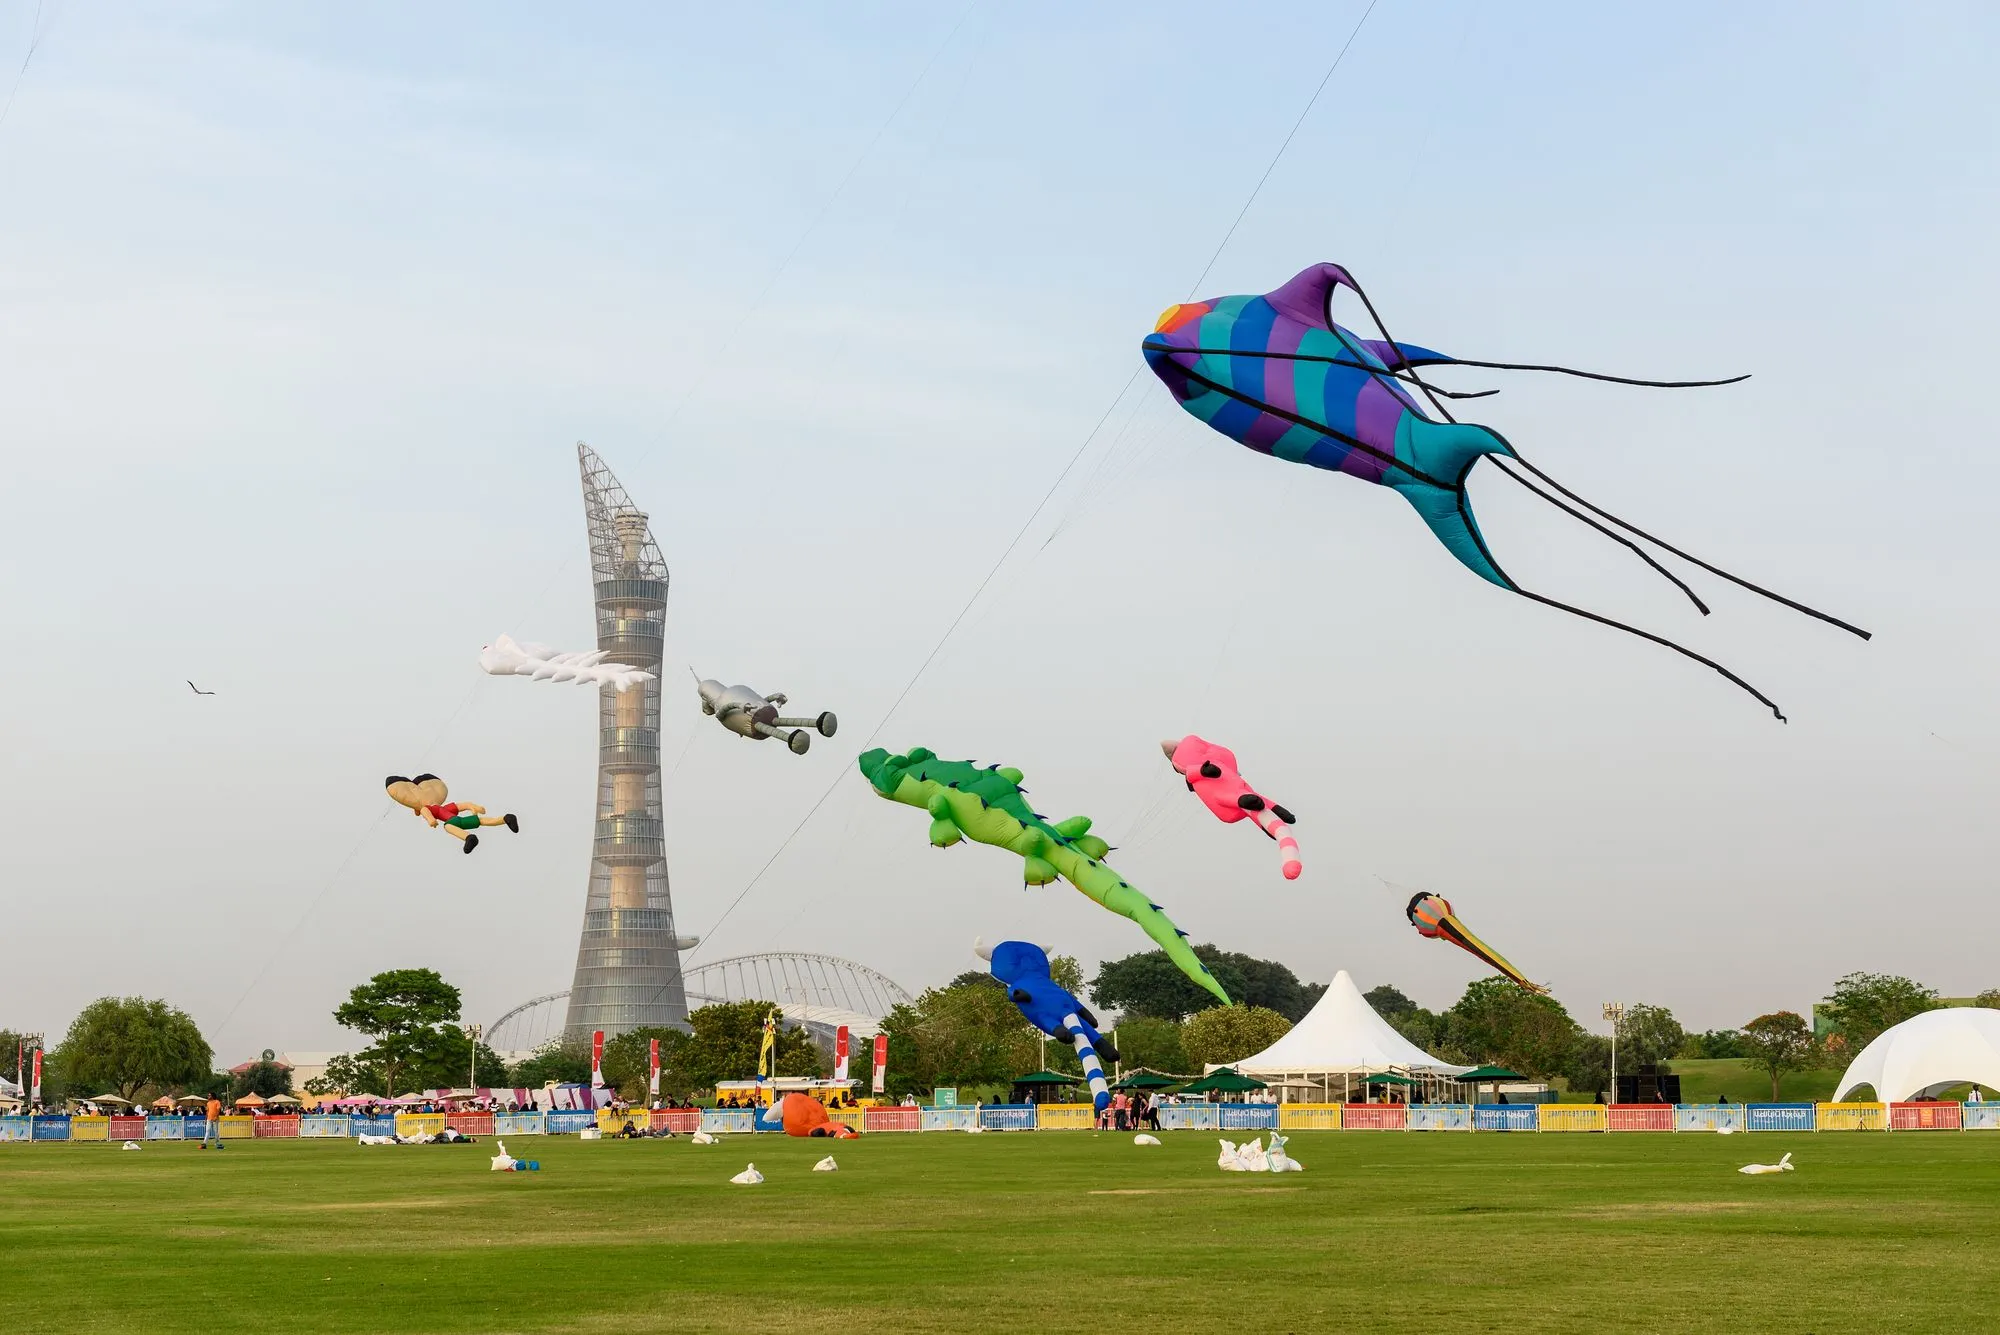 Aspire International Kite Festival in Qatar